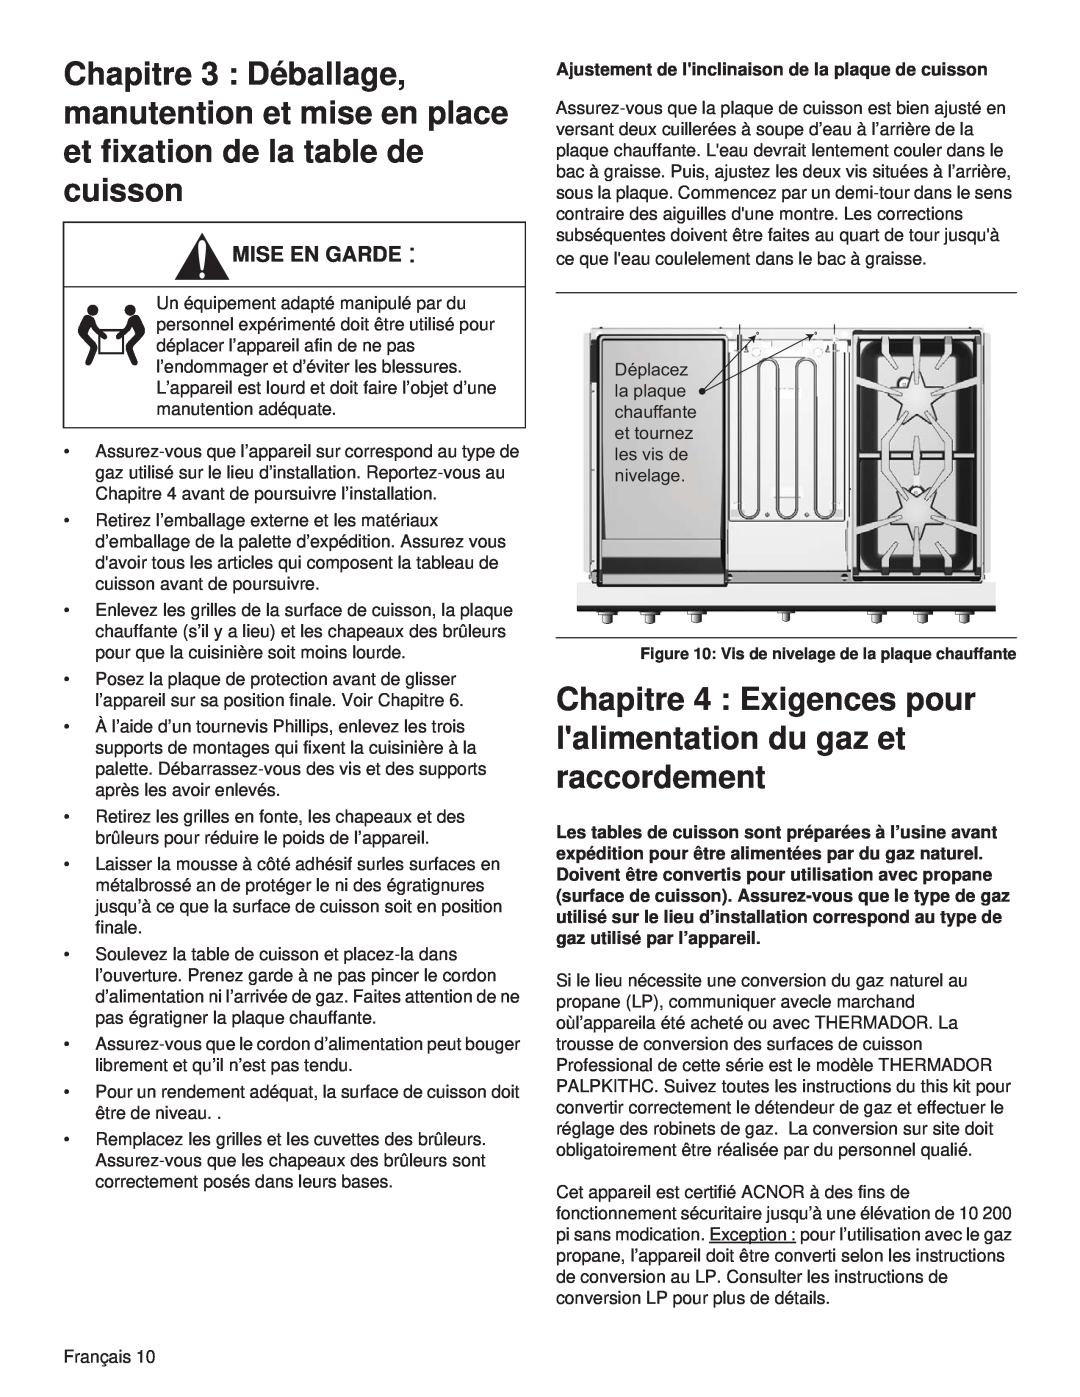 Thermador PCG48, PCG36, PCG30 installation manual Français 